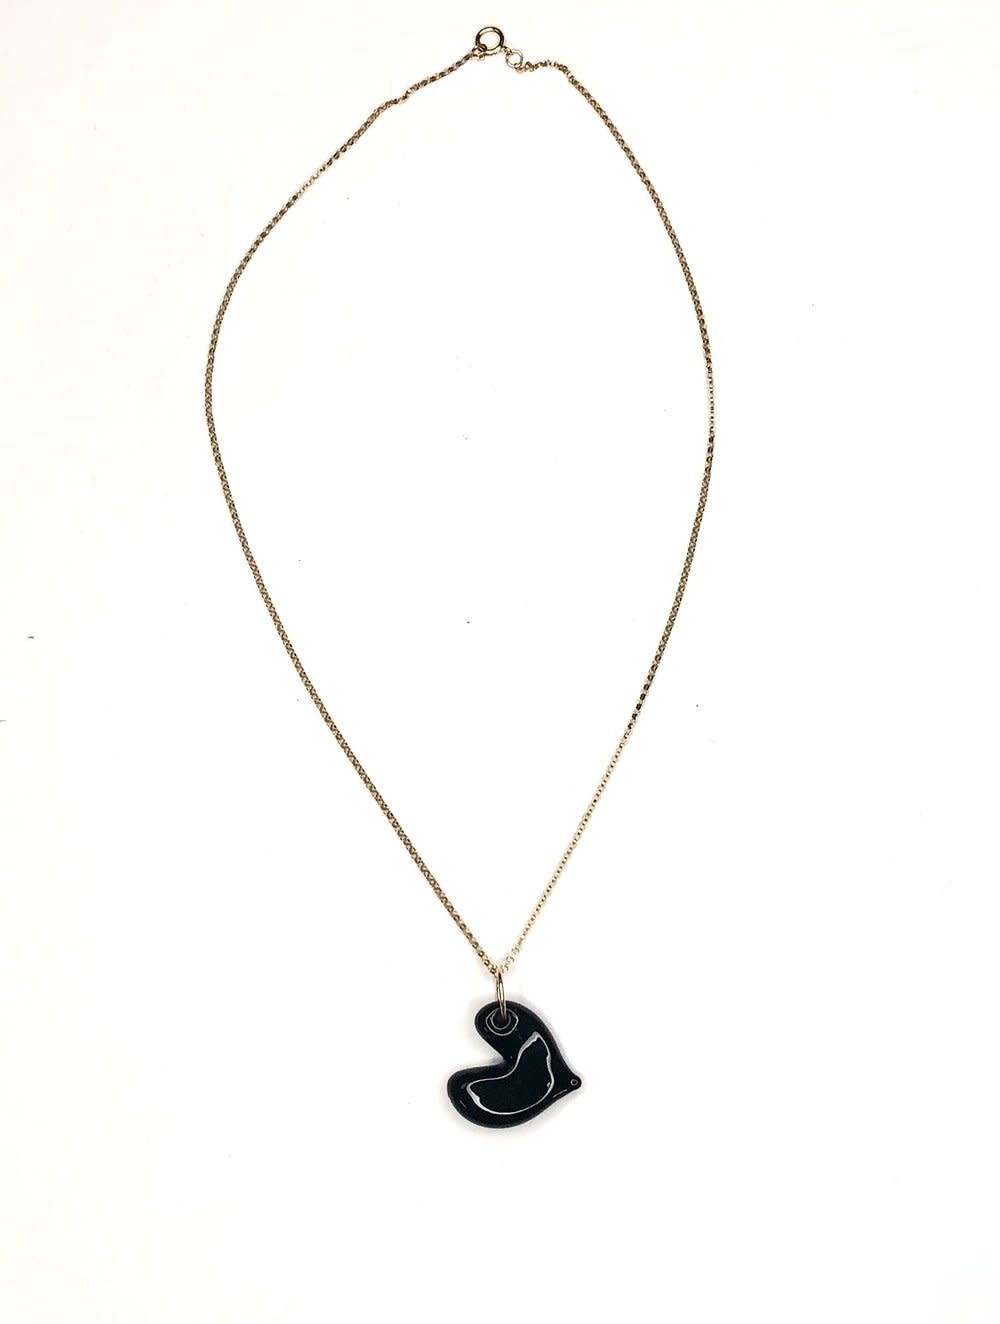 Minori Takagi Necklace - Glass Heart, 14K Gold Fill - Black